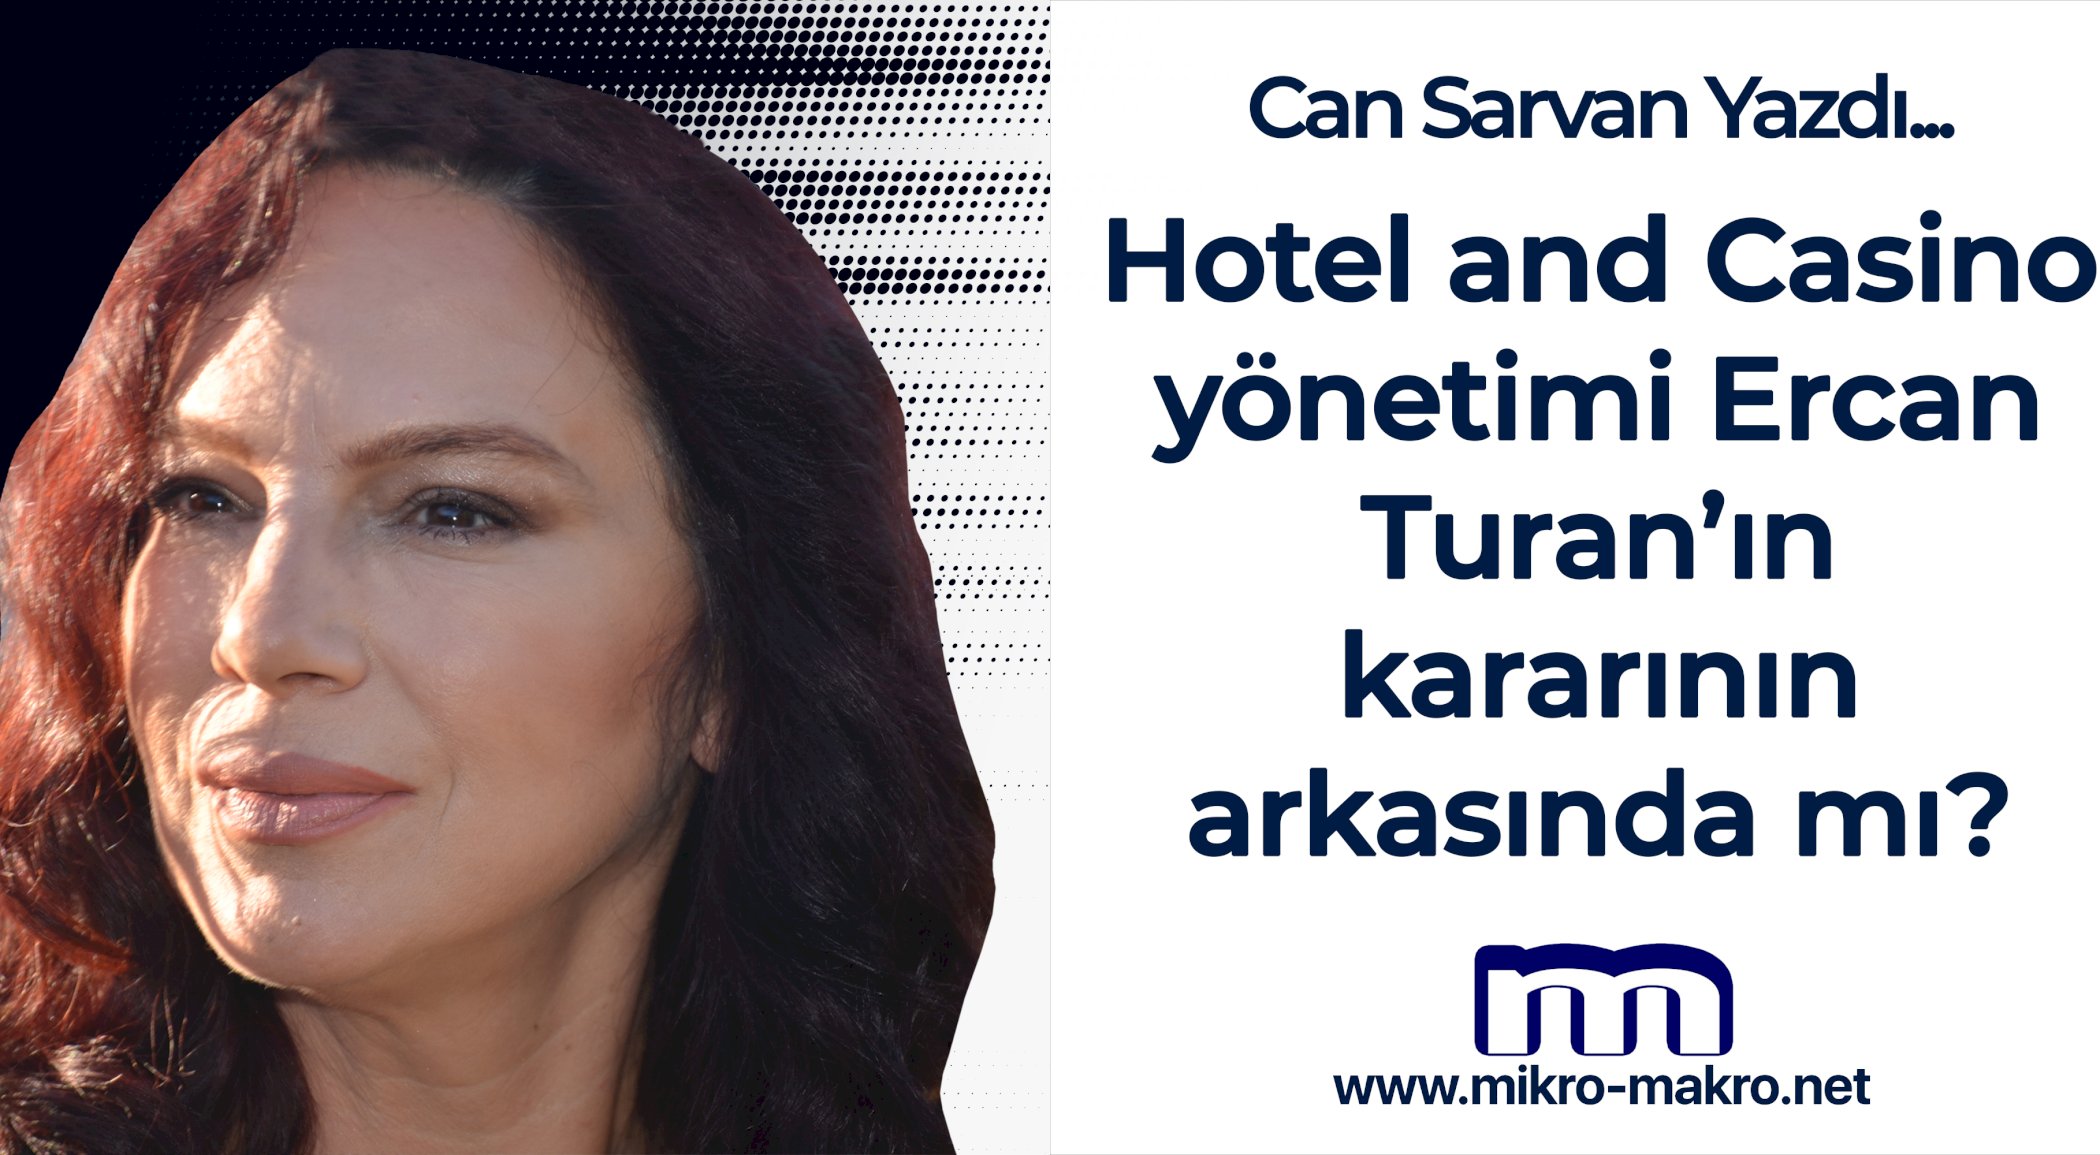 https://www.mikro-makro.net/hotel-and-casino-yonetimi-ercan-turanin-kararinin-arkasinda-mi